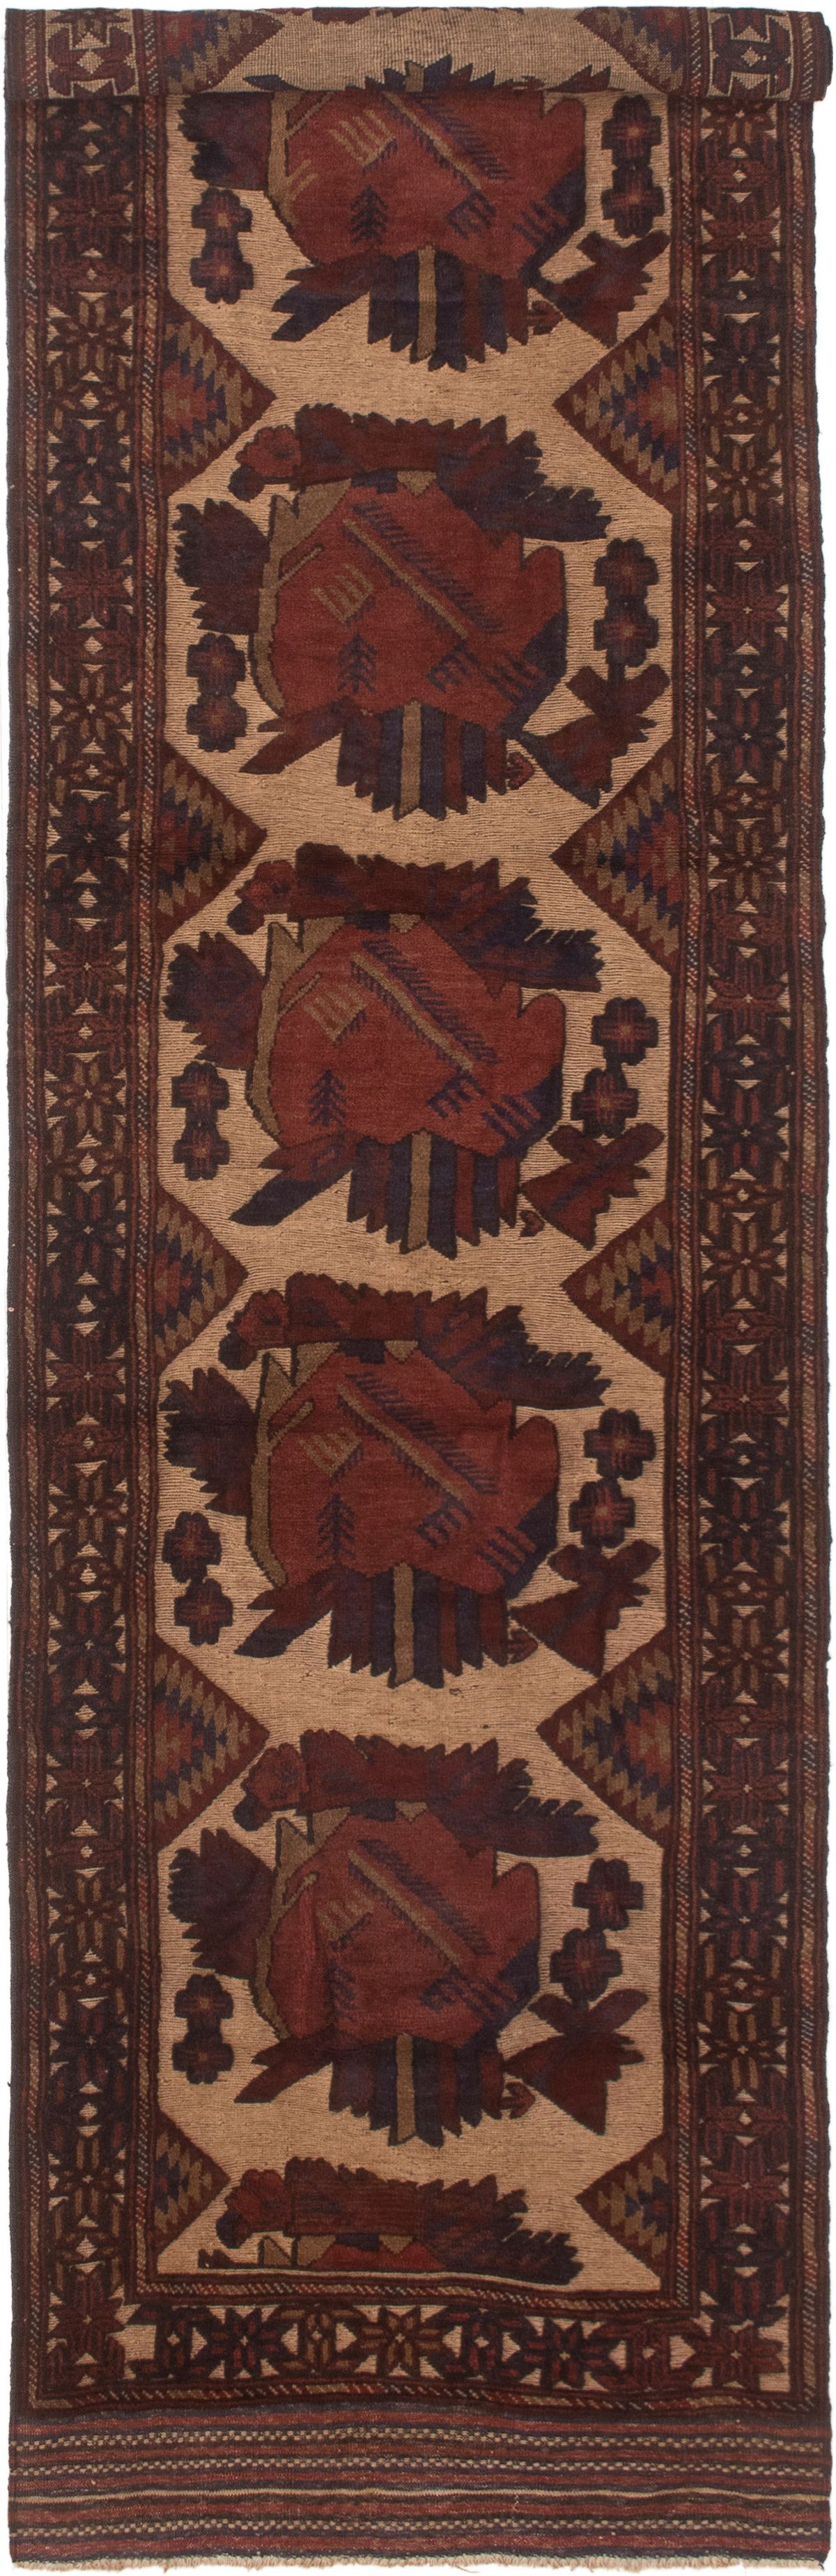 Hand-knotted Tajik Caucasian Copper, Cream Wool Rug 2'11" x 12'6" Size: 2'11" x 12'6"  